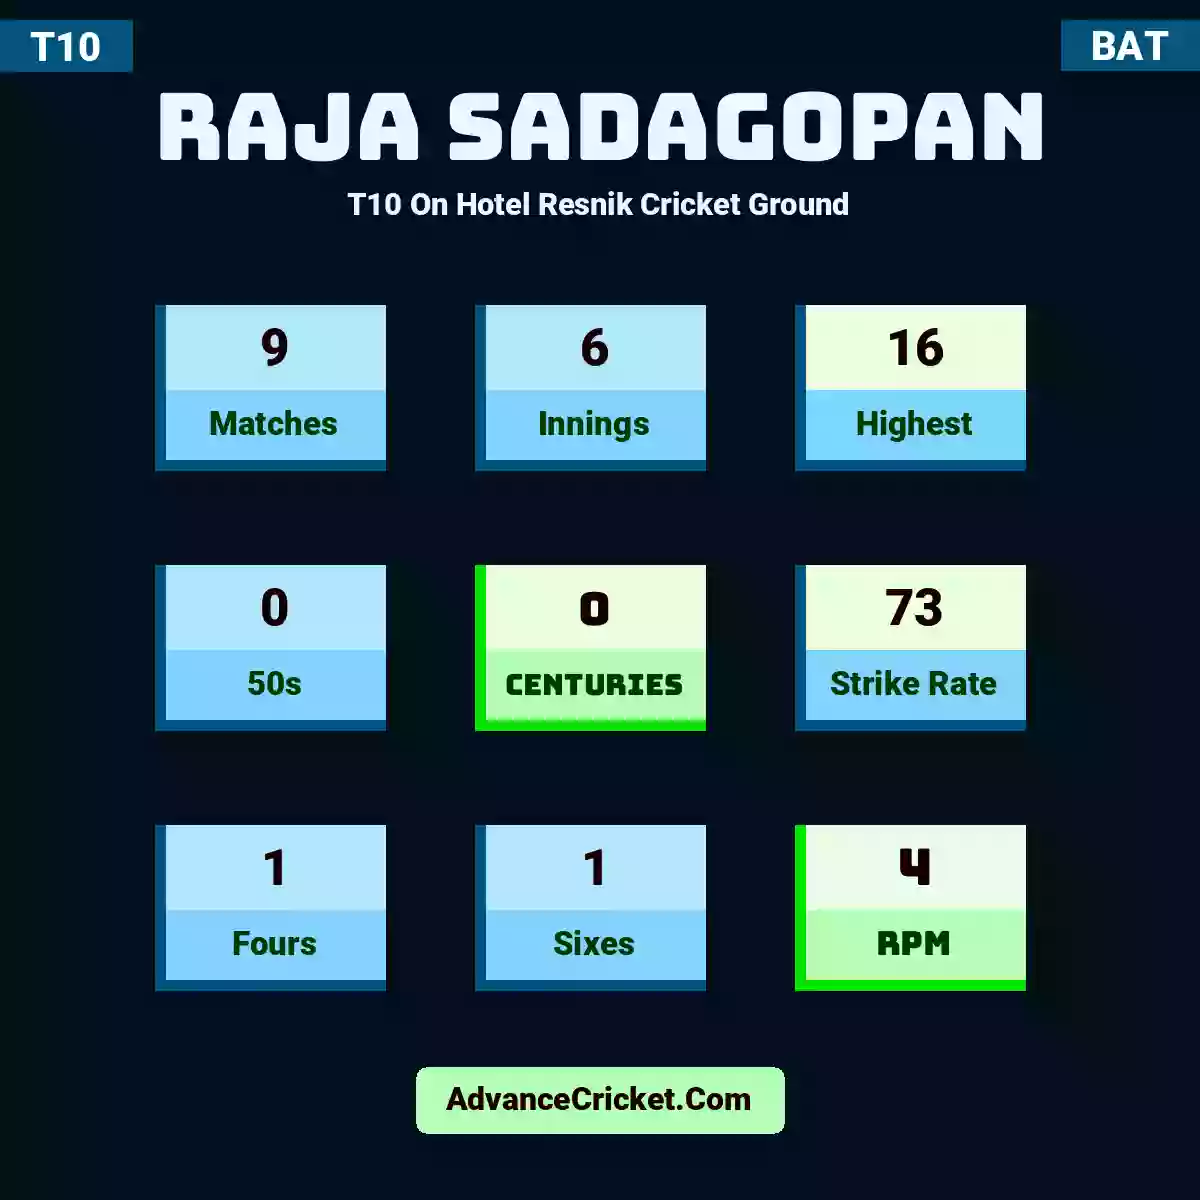 Raja Sadagopan T10  On Hotel Resnik Cricket Ground, Raja Sadagopan played 9 matches, scored 16 runs as highest, 0 half-centuries, and 0 centuries, with a strike rate of 73. R.Sadagopan hit 1 fours and 1 sixes, with an RPM of 4.